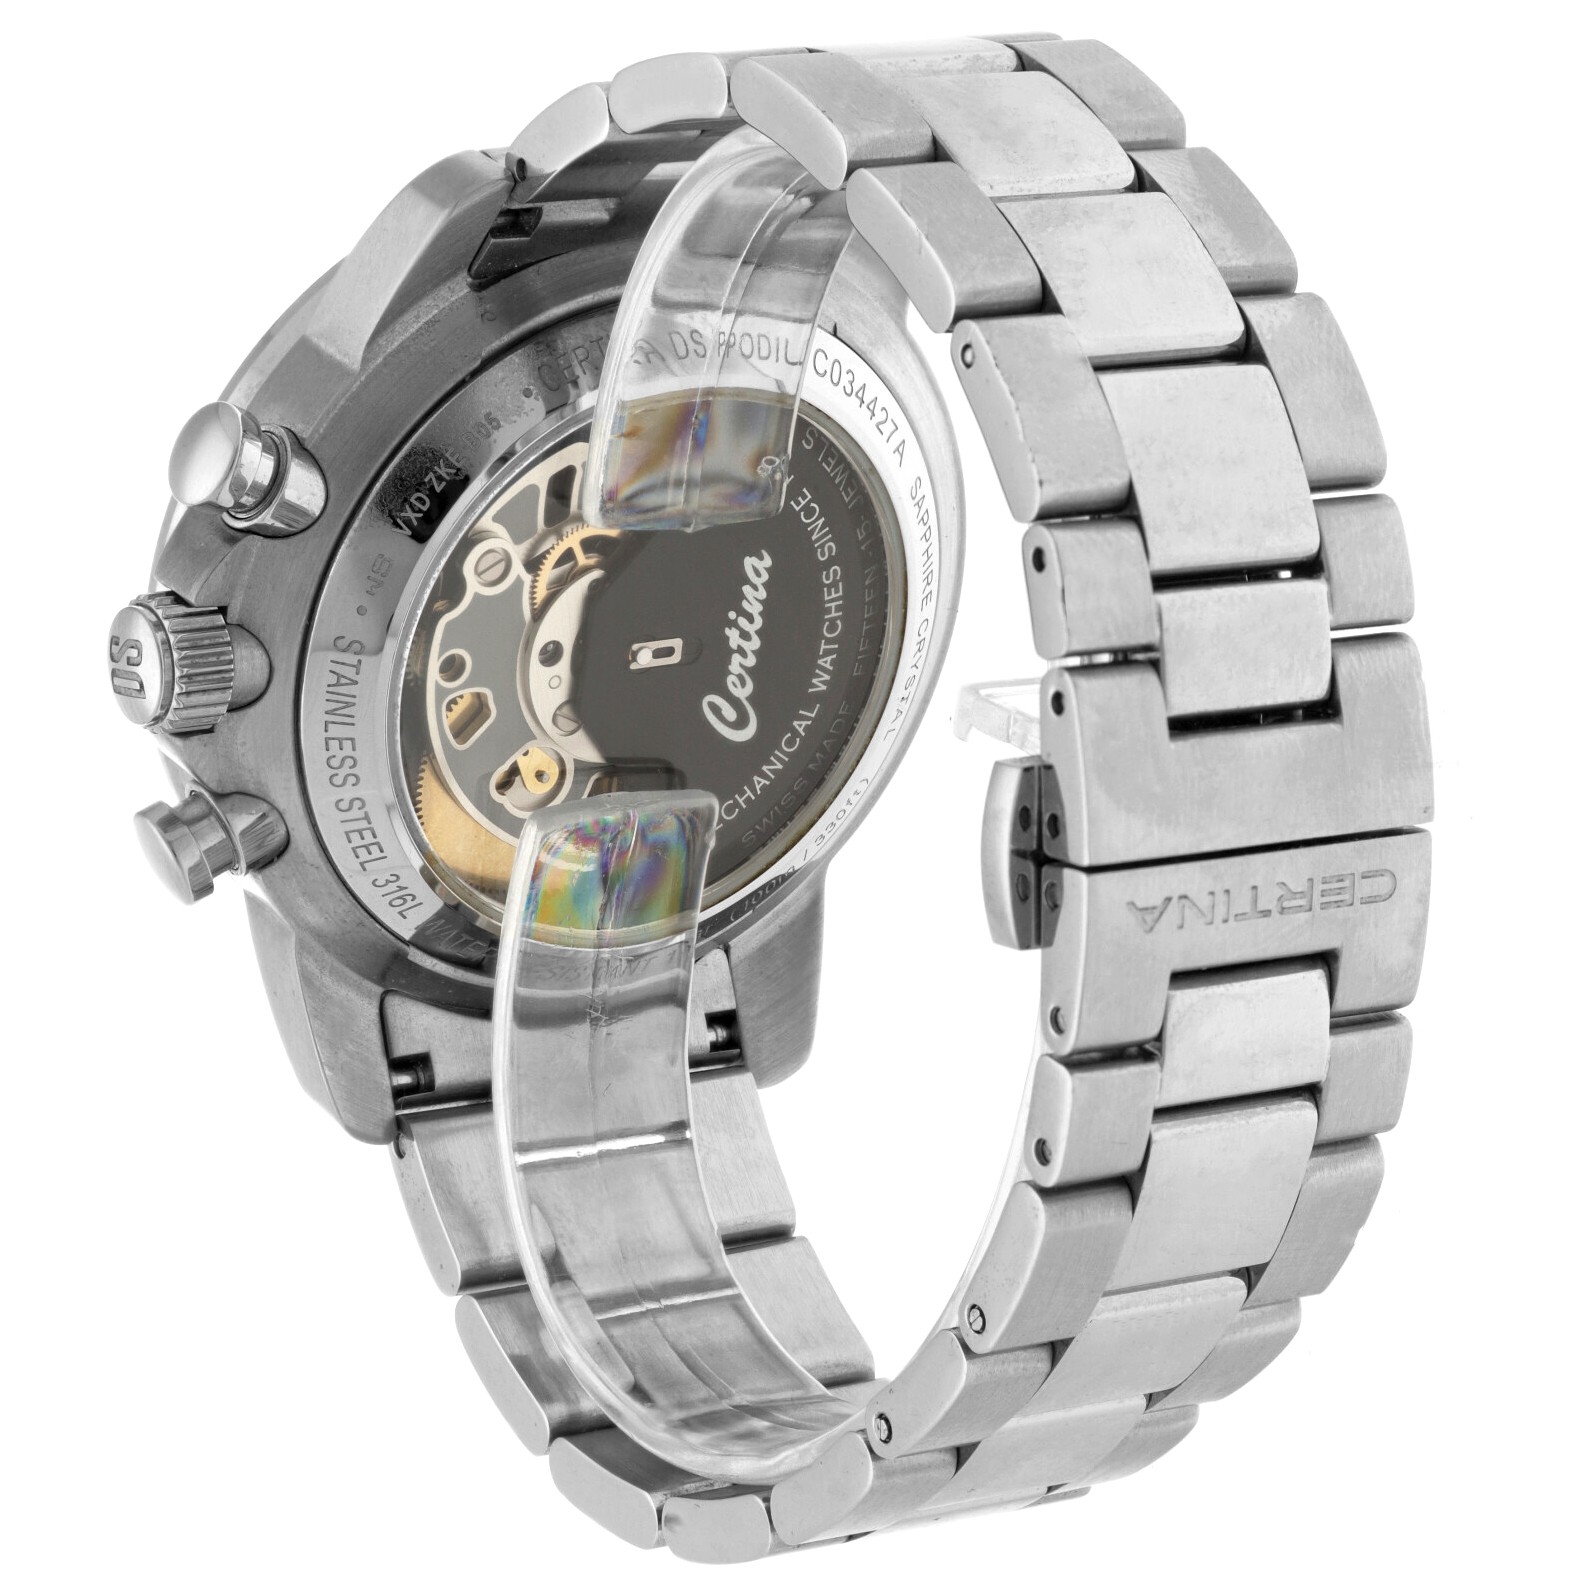 No Reserve - Certina DS Podium Chronograph C034.427.11.057.00 - Men's watch. - Image 3 of 6